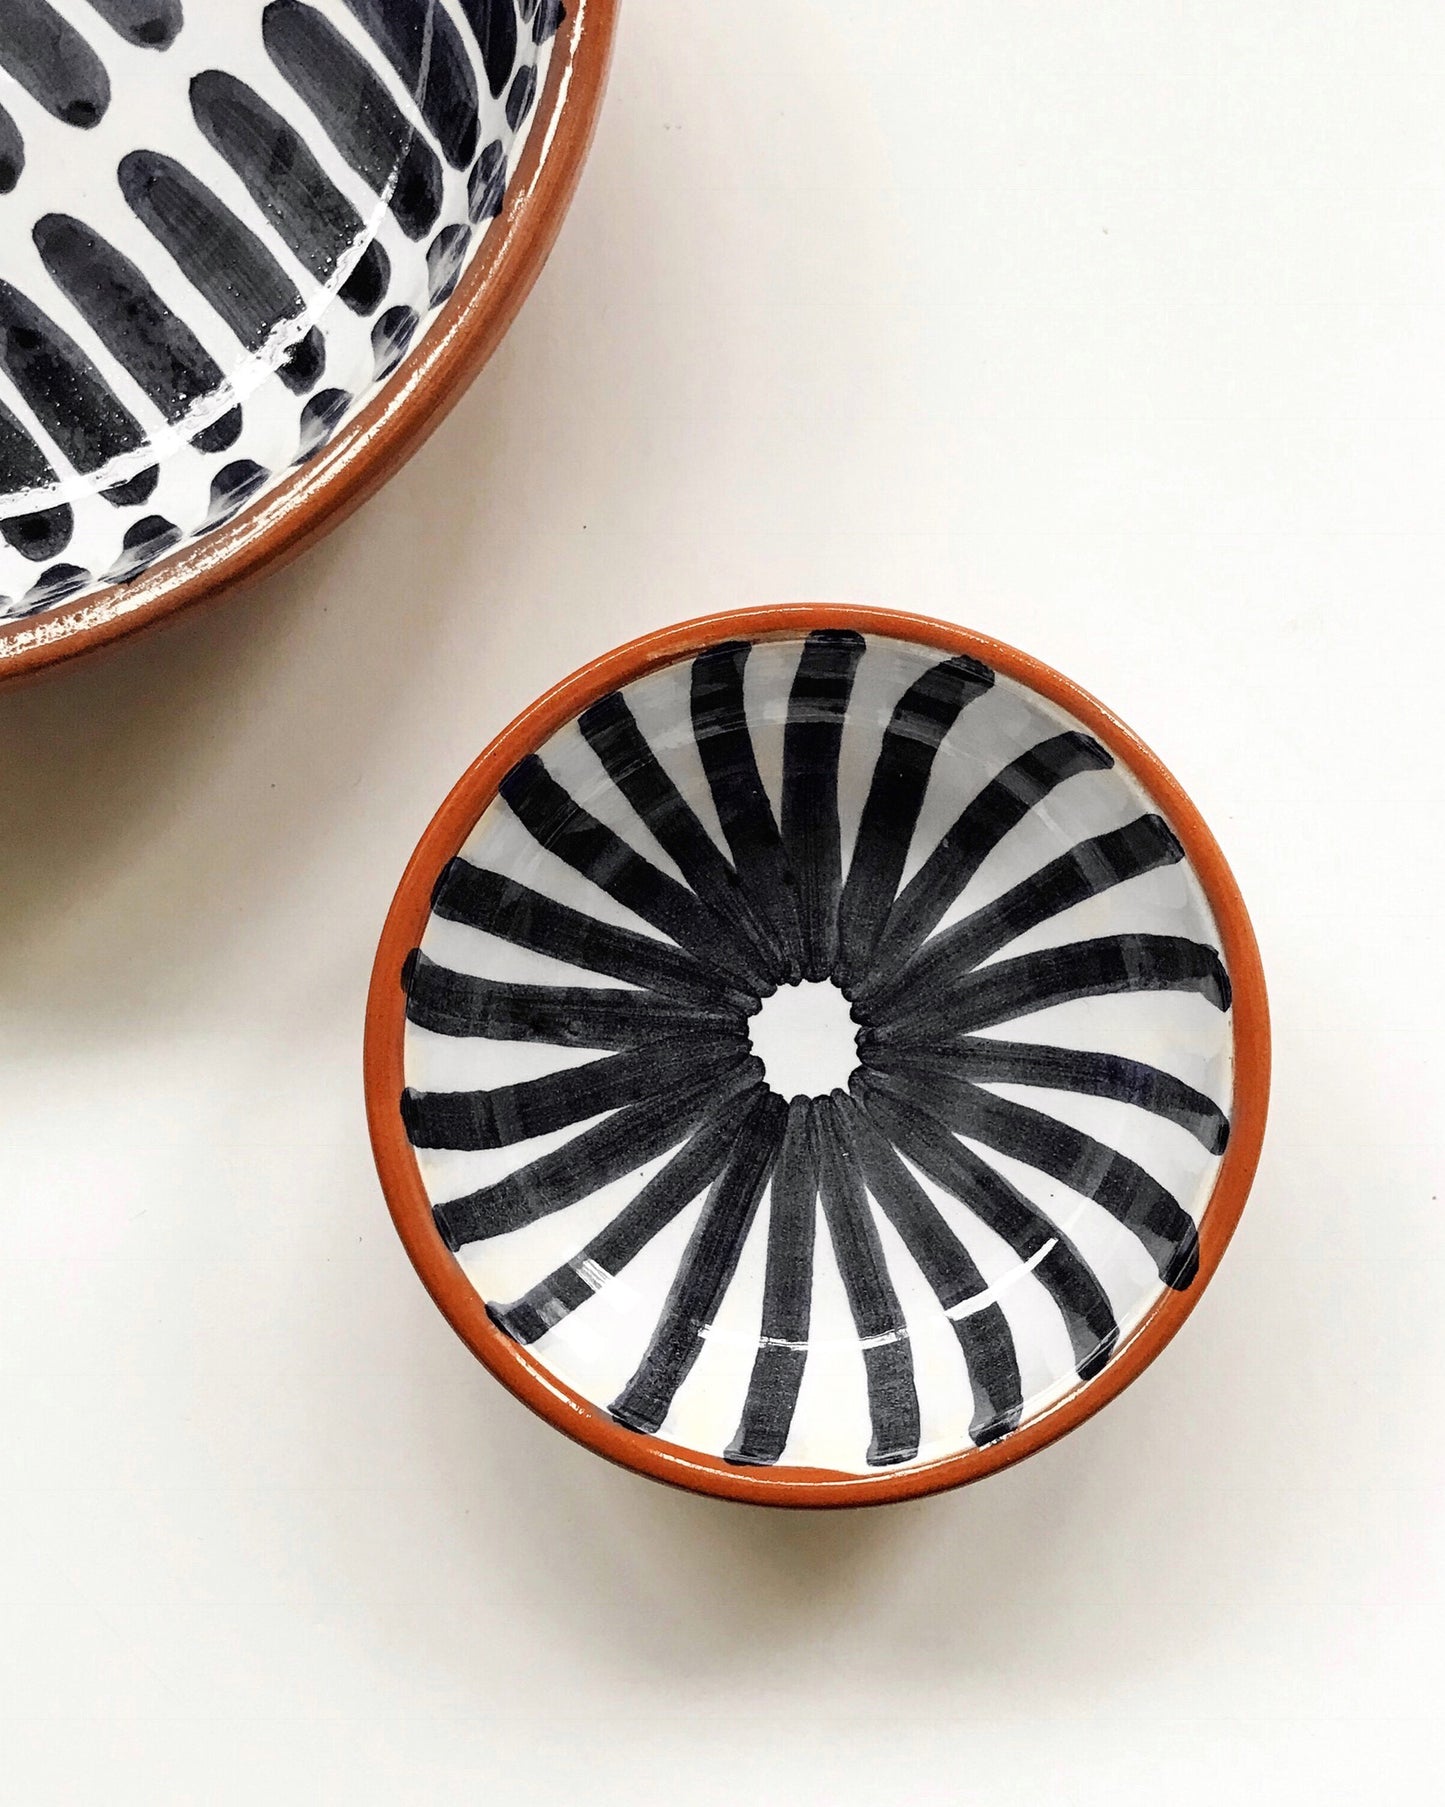 Handmade ceramic bowl geometric pattern black and white B&W